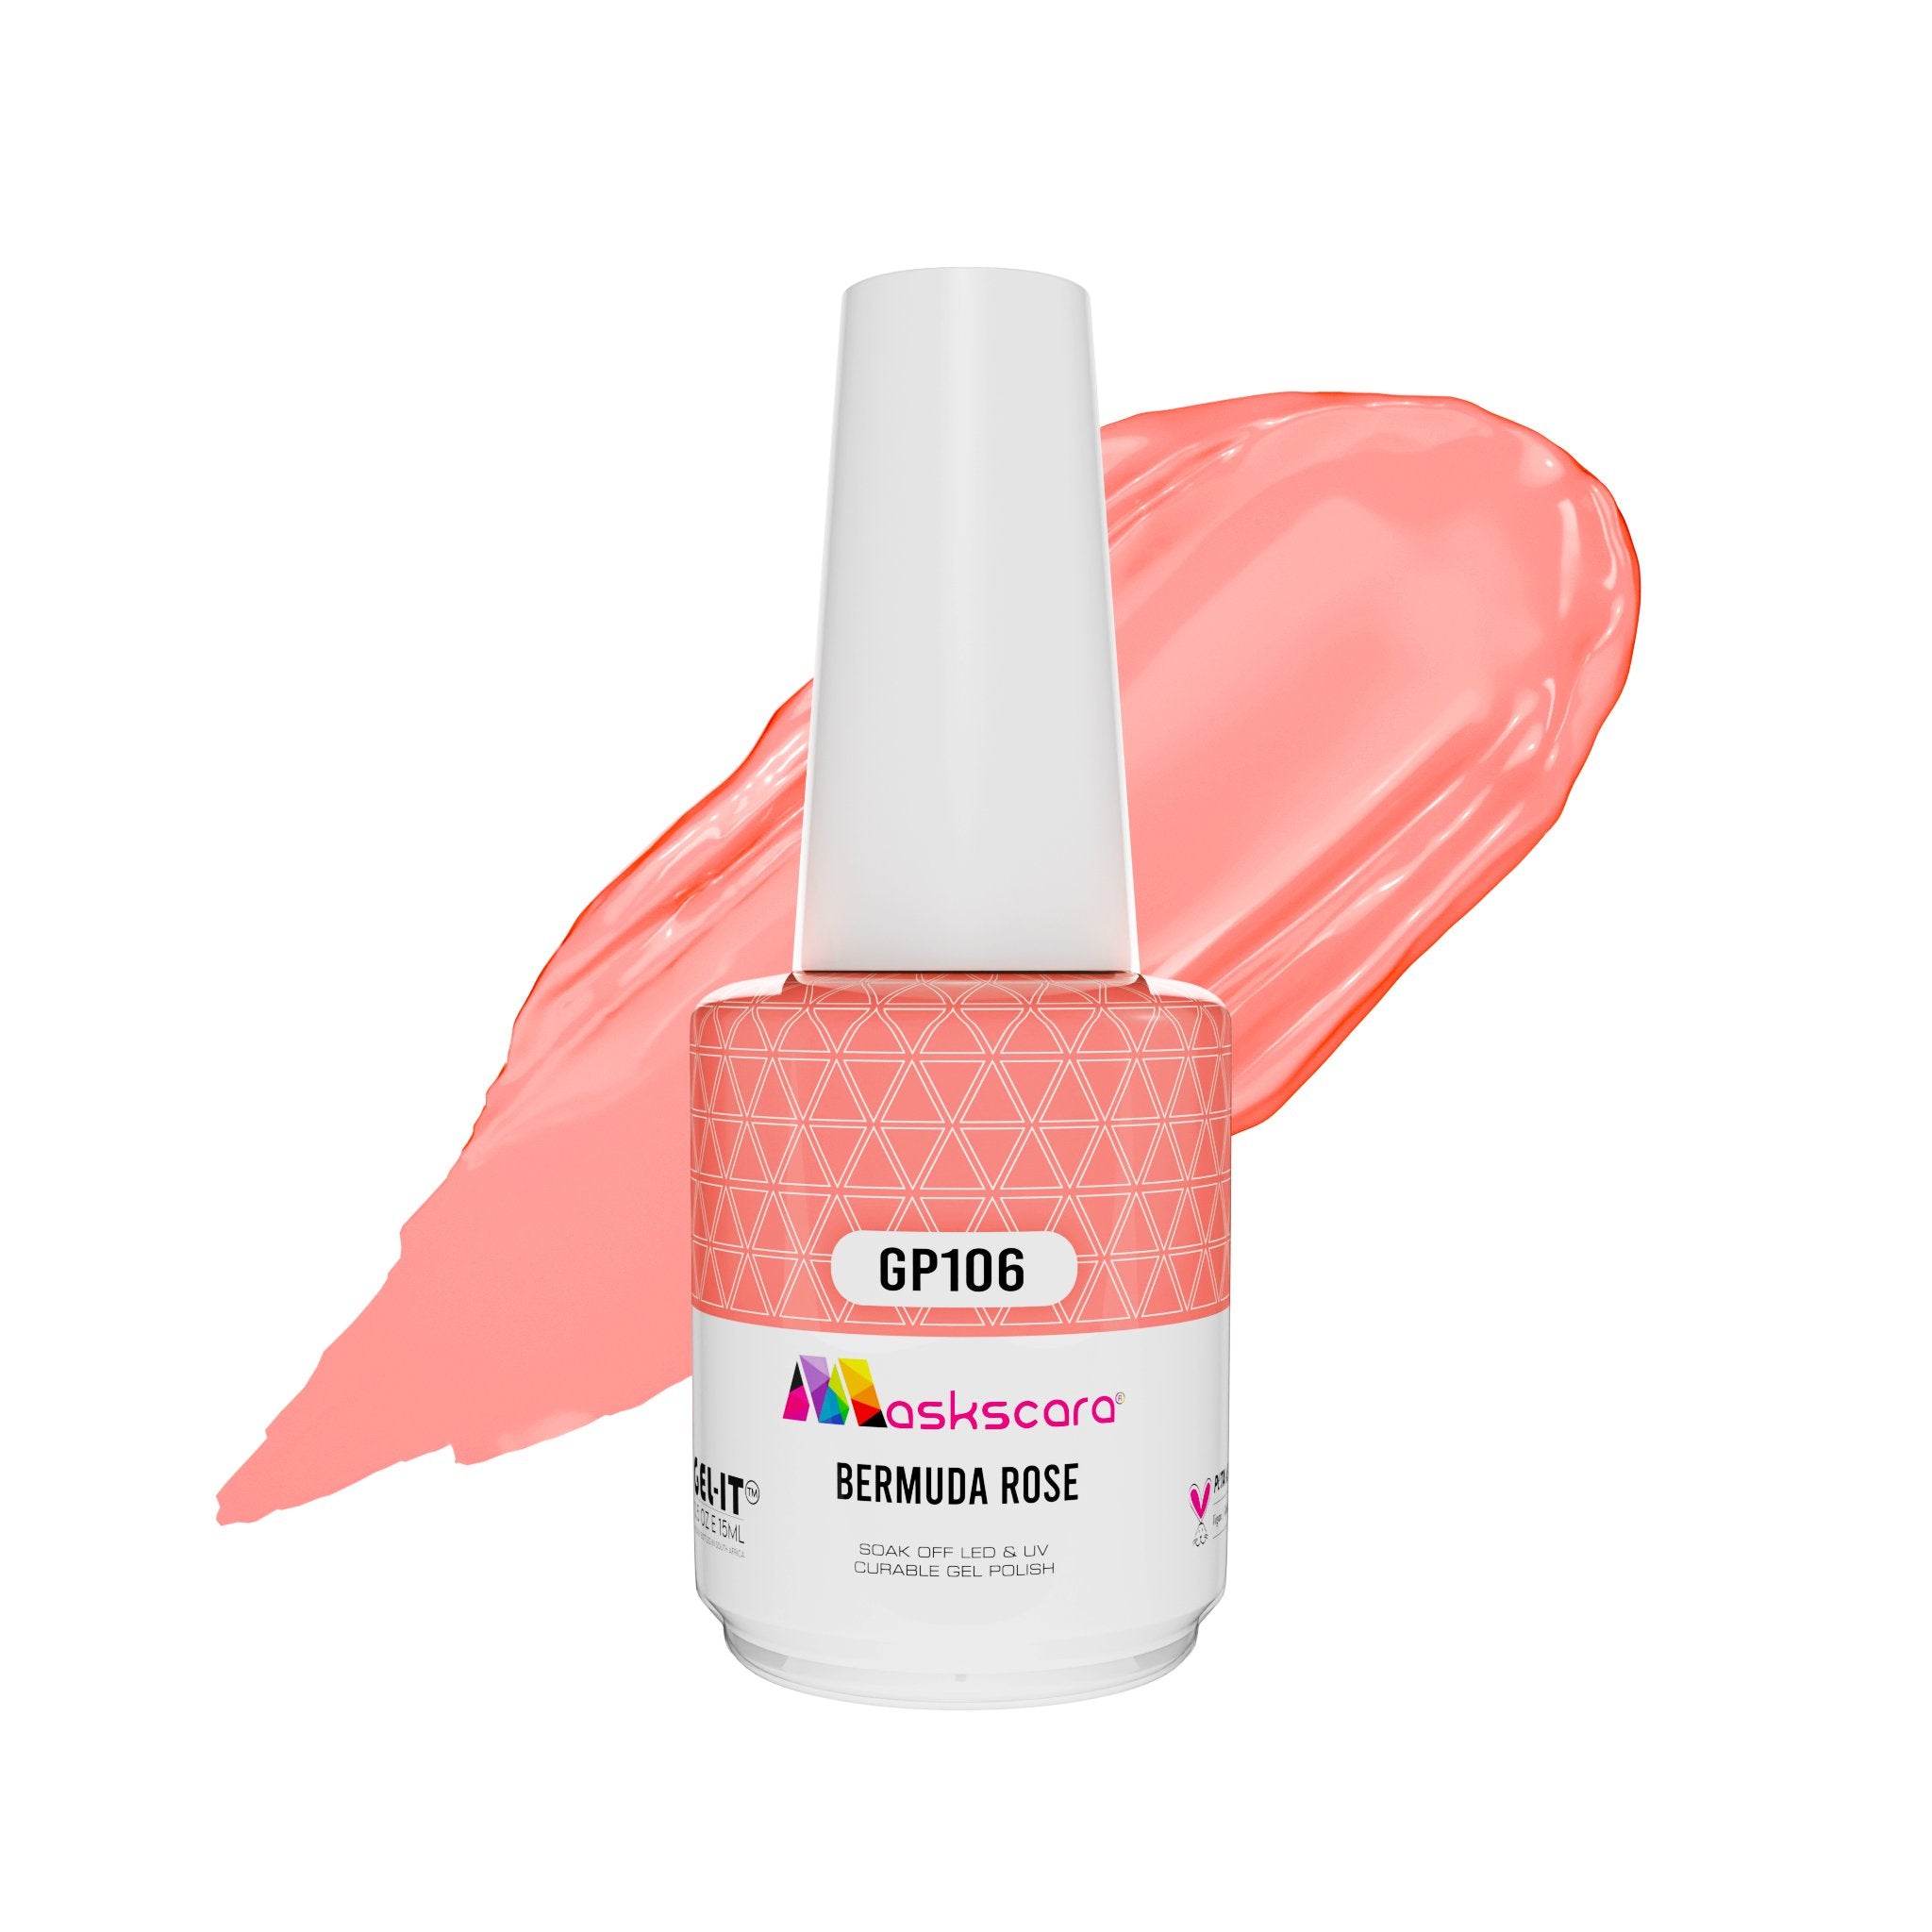 <img scr = “ GP106 Bermuda Rose.jpeg” alt = “Bright Salmon gel polish colour by the brand Maskscara”>